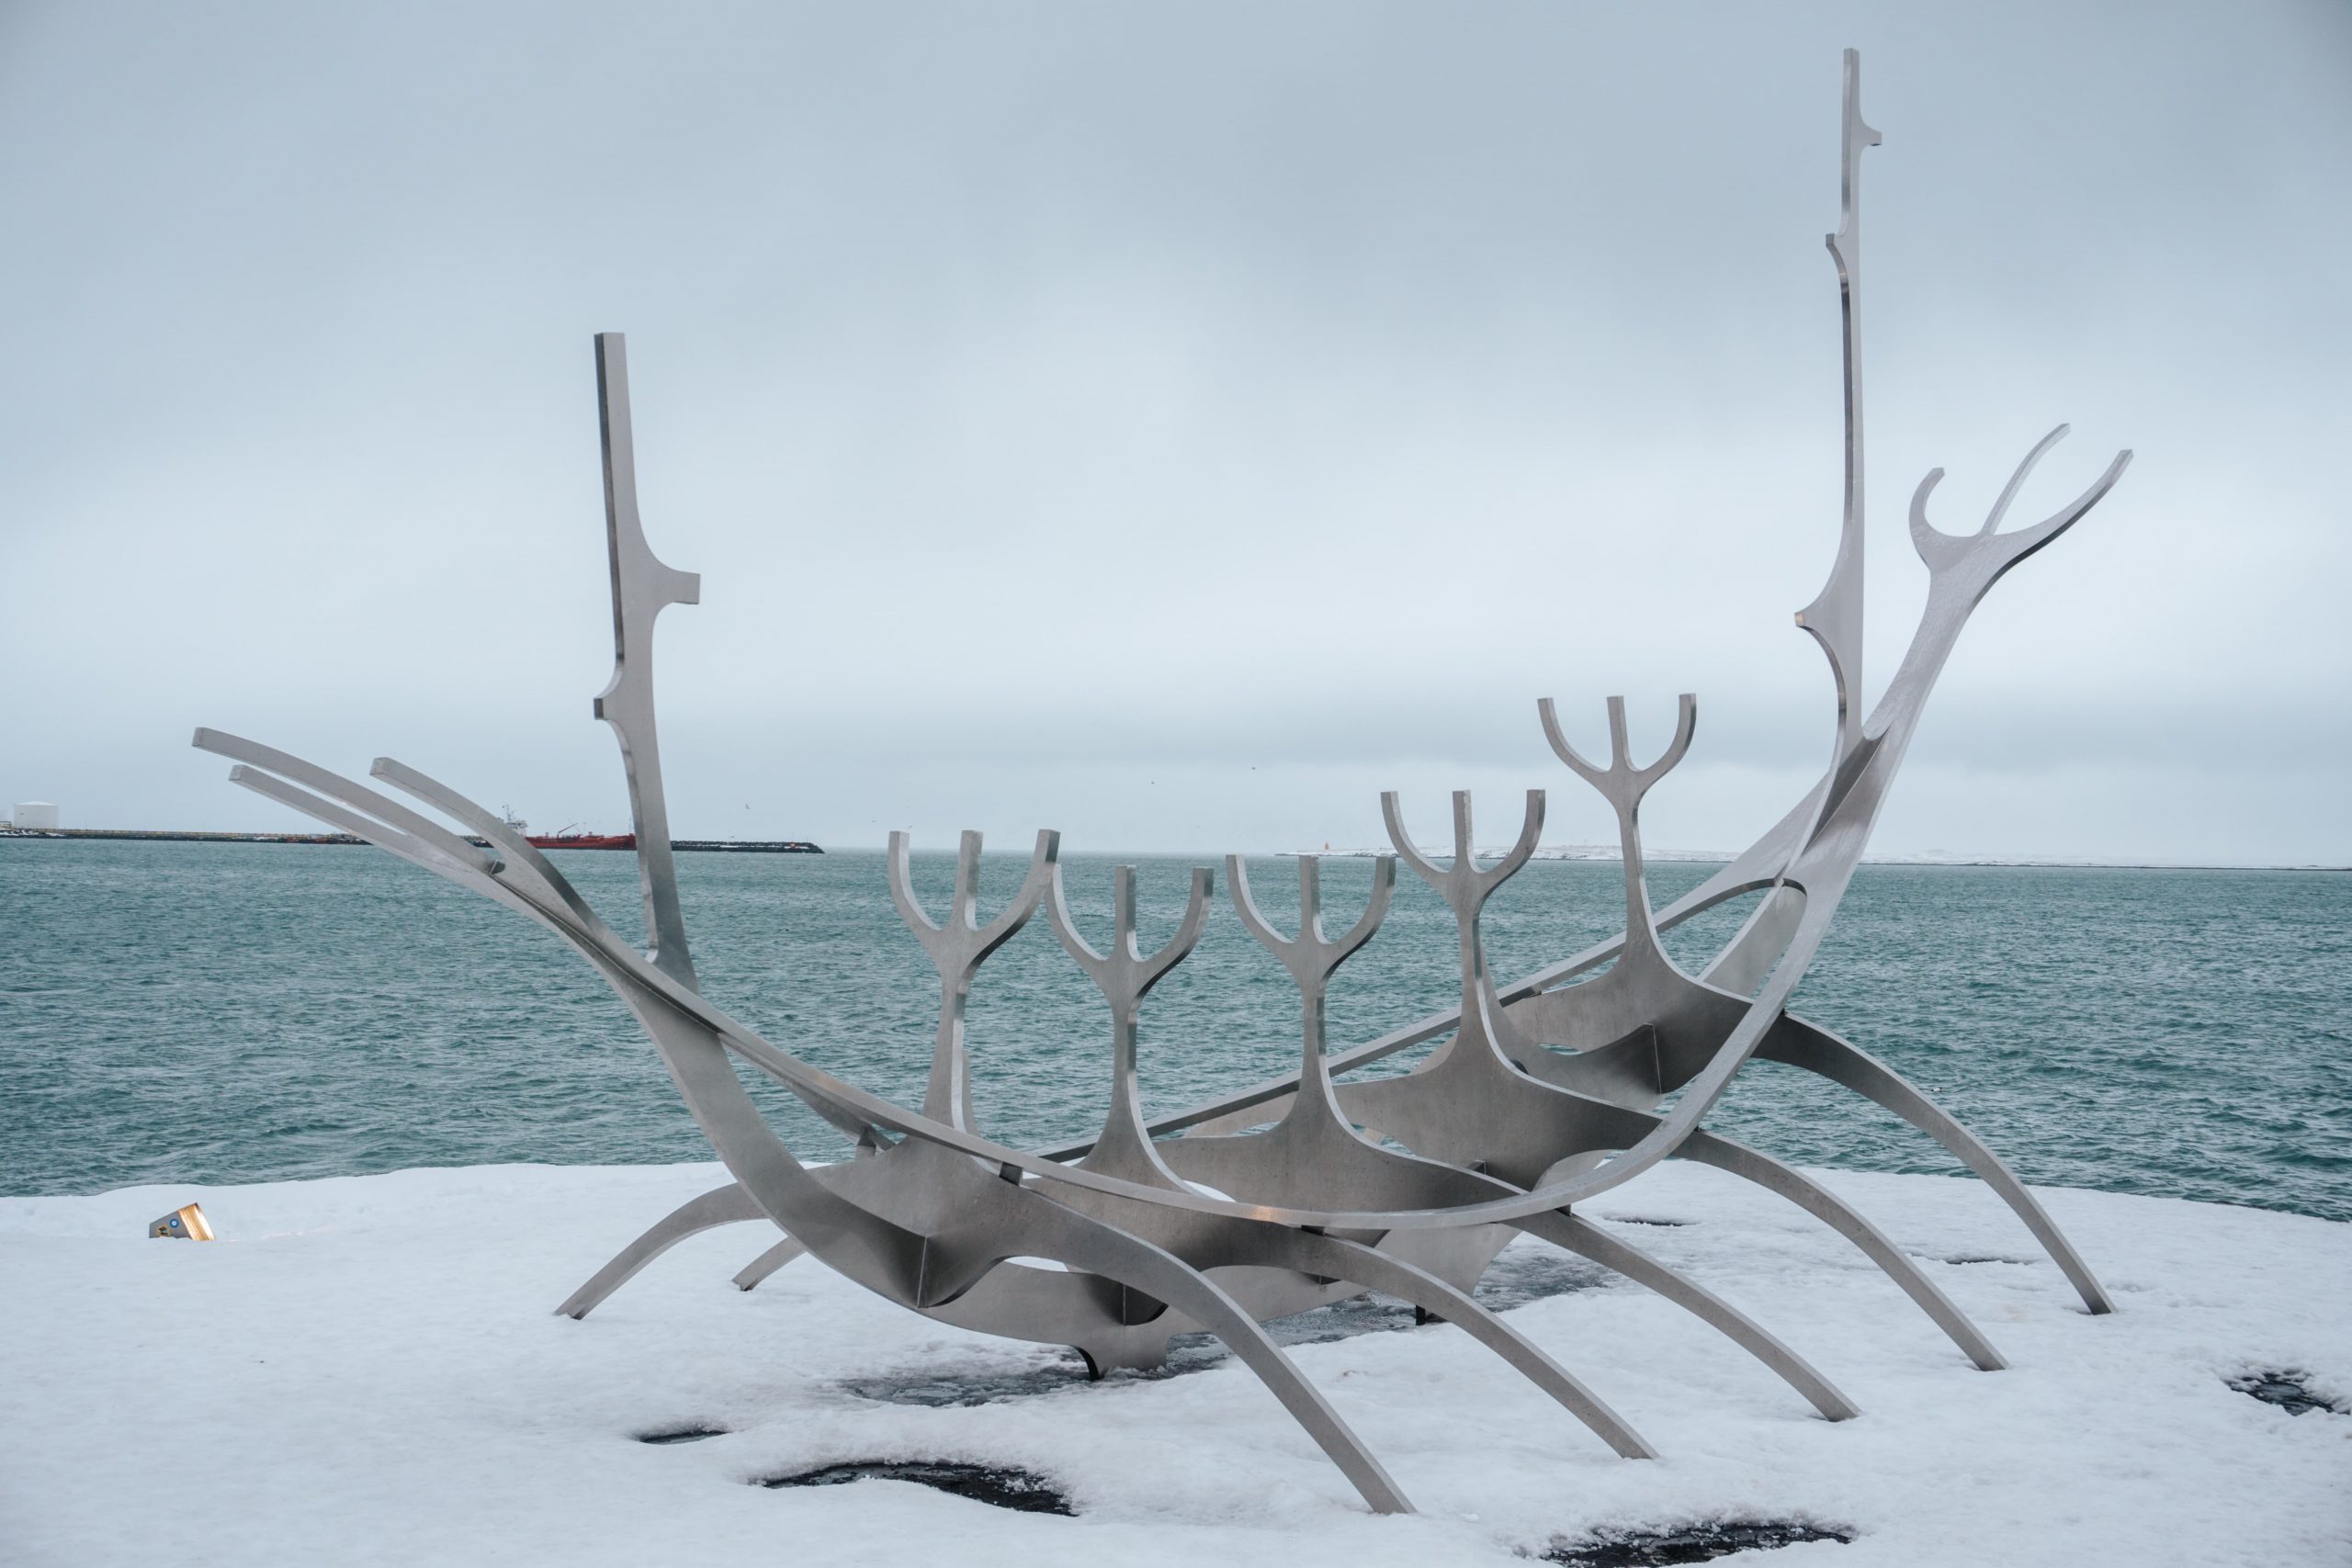 Sun Voyager artwork sculpture in Reykjavik Iceland